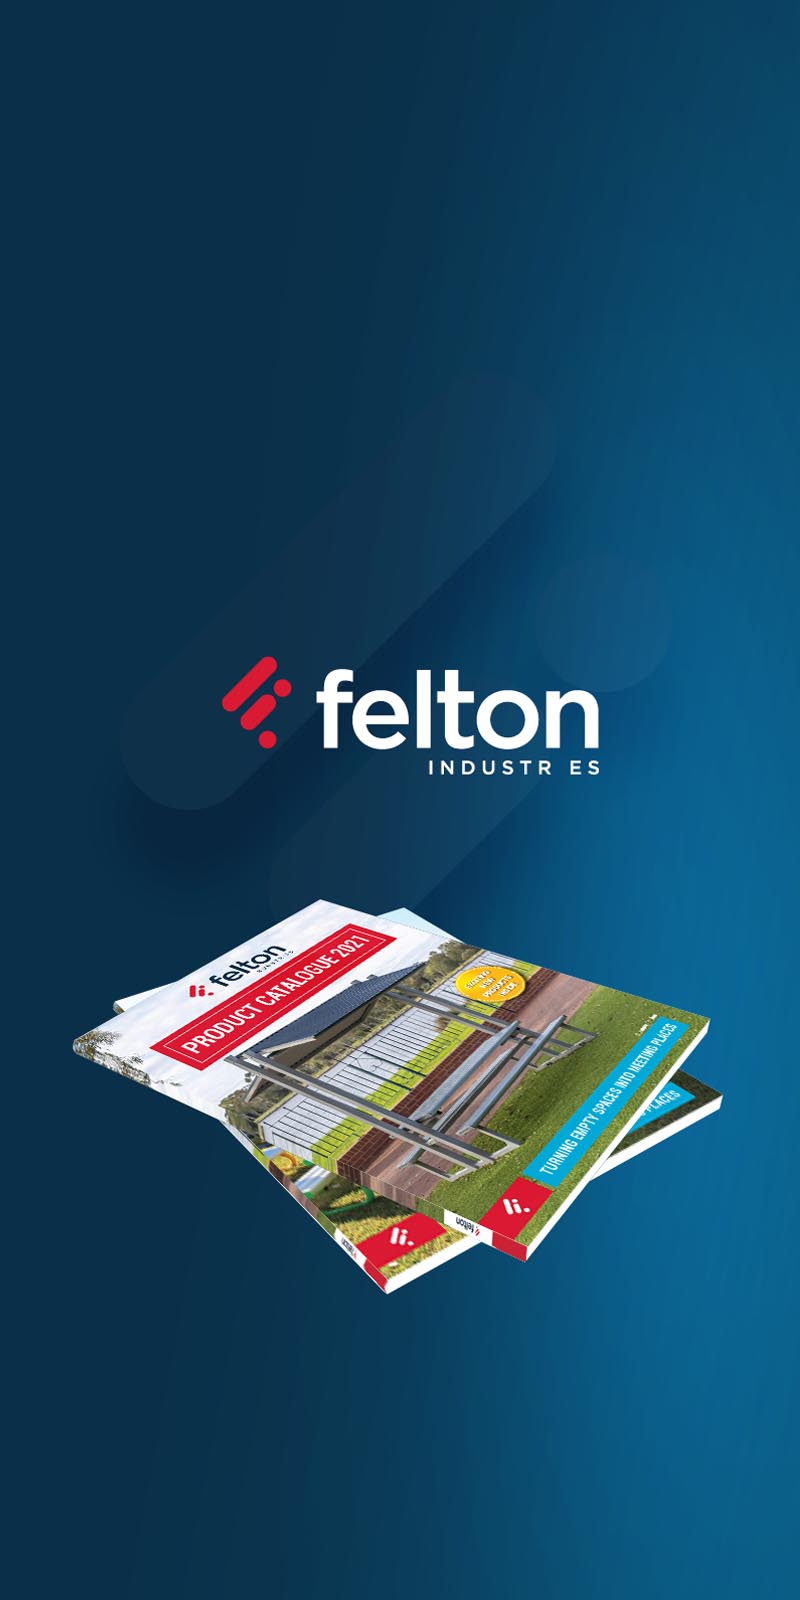 Felton Industries Brand refresh by think creative agency